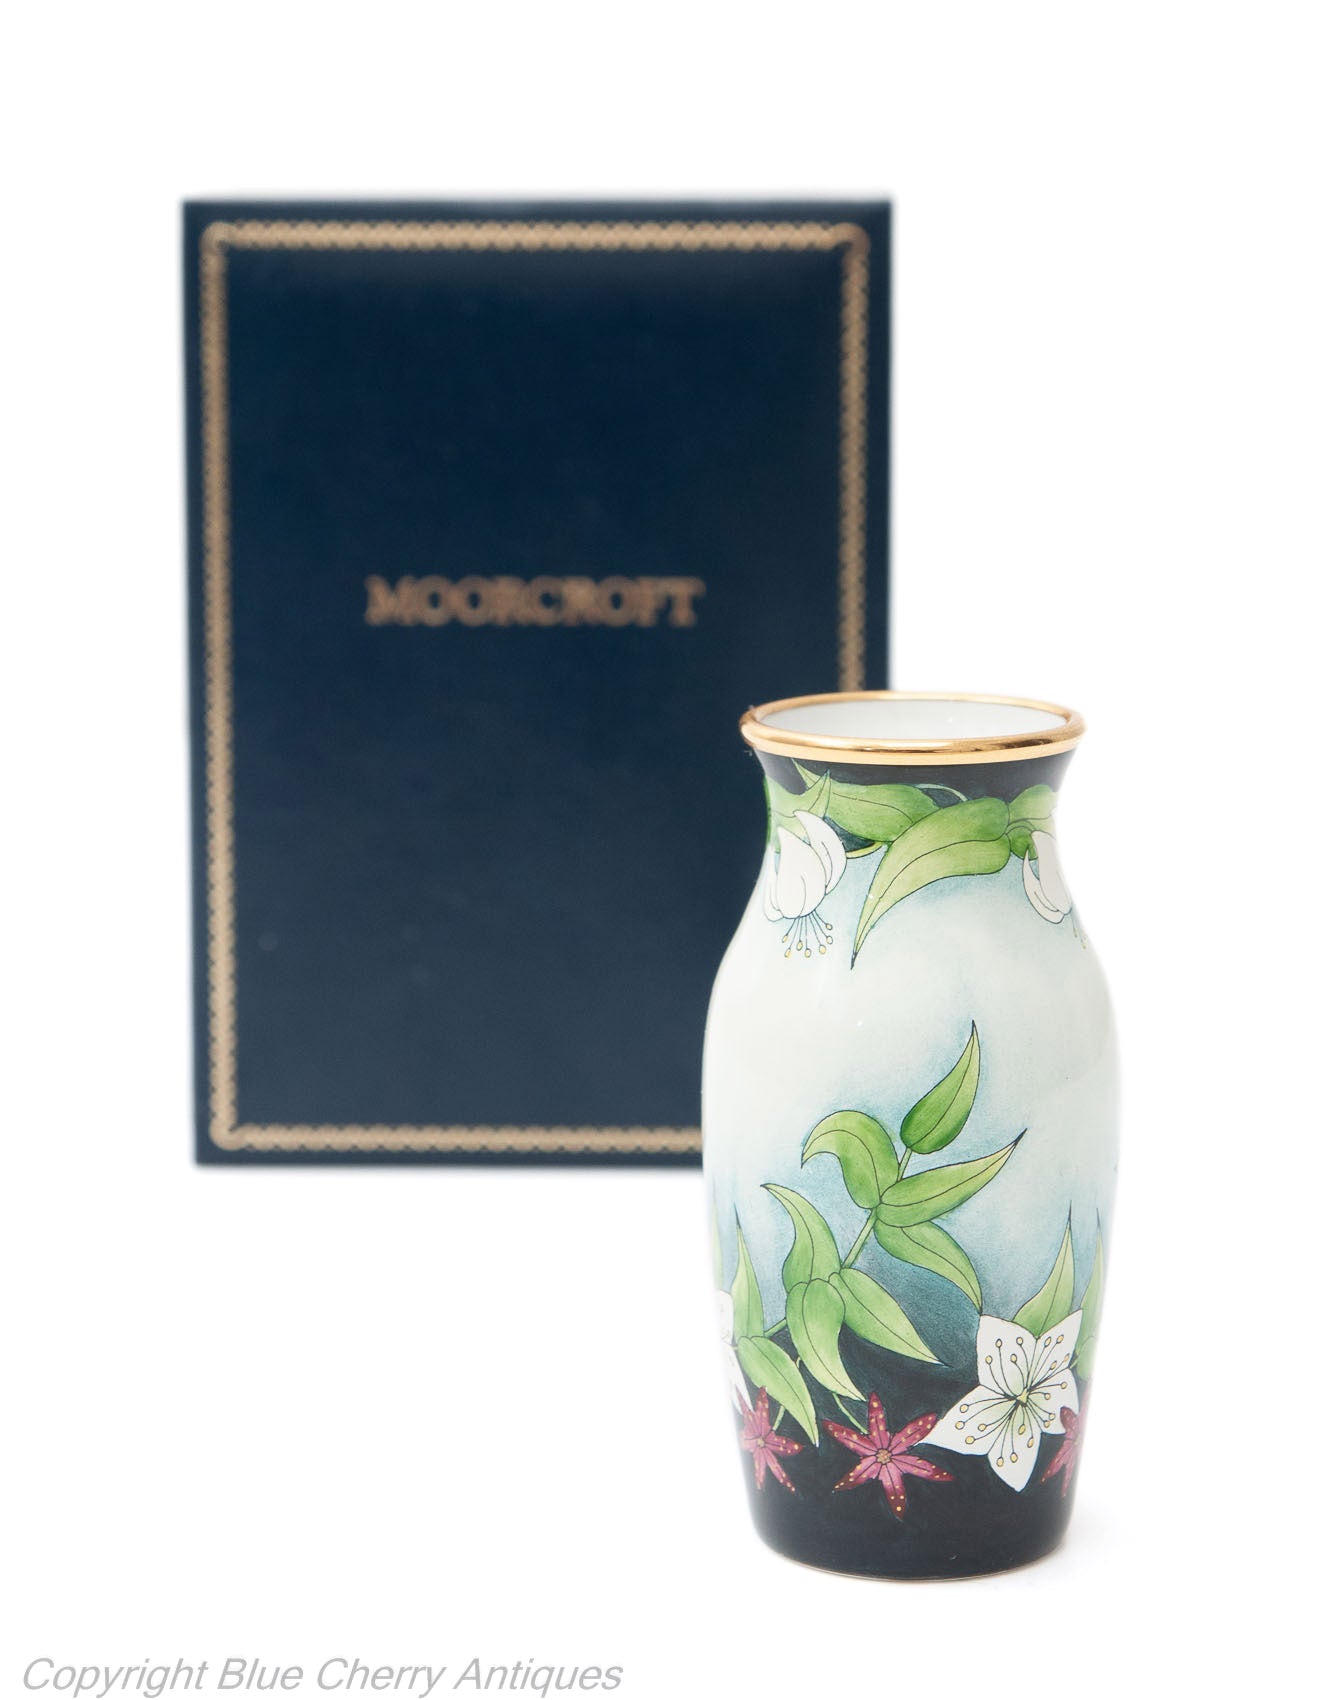 Moorcroft Enamels Miniature Hand Painted Vase with Flowers in Presentation Box (Code 1804)